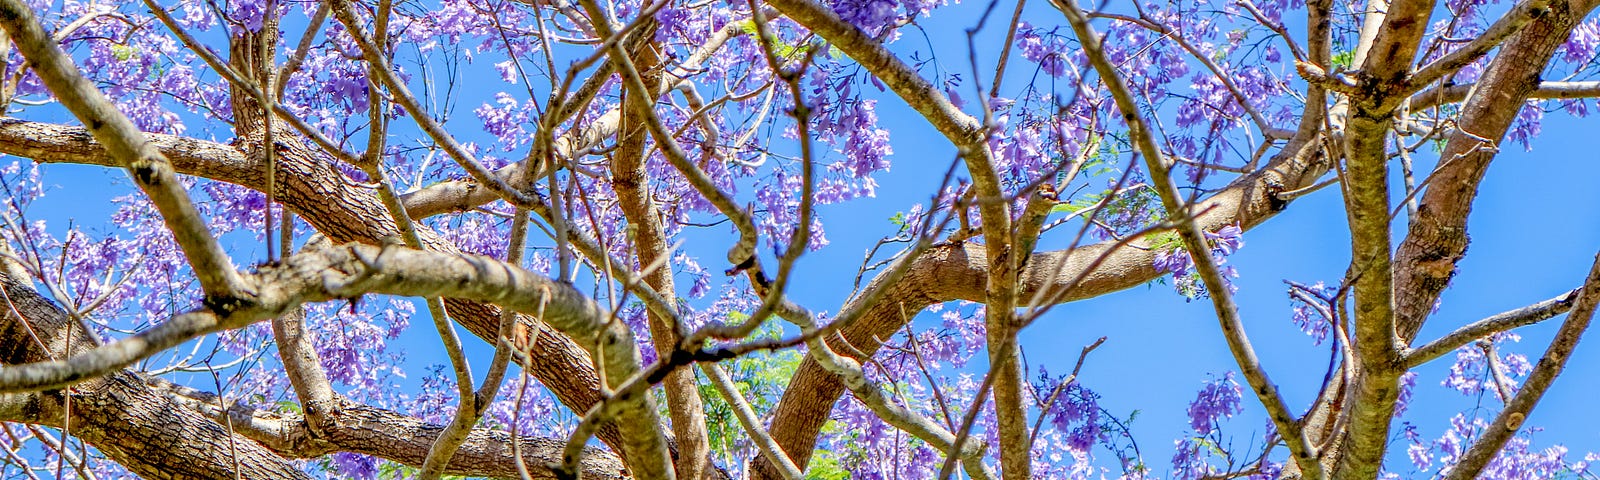 Purple flowers of a jacaranda tree against the sky’s blue backdrop